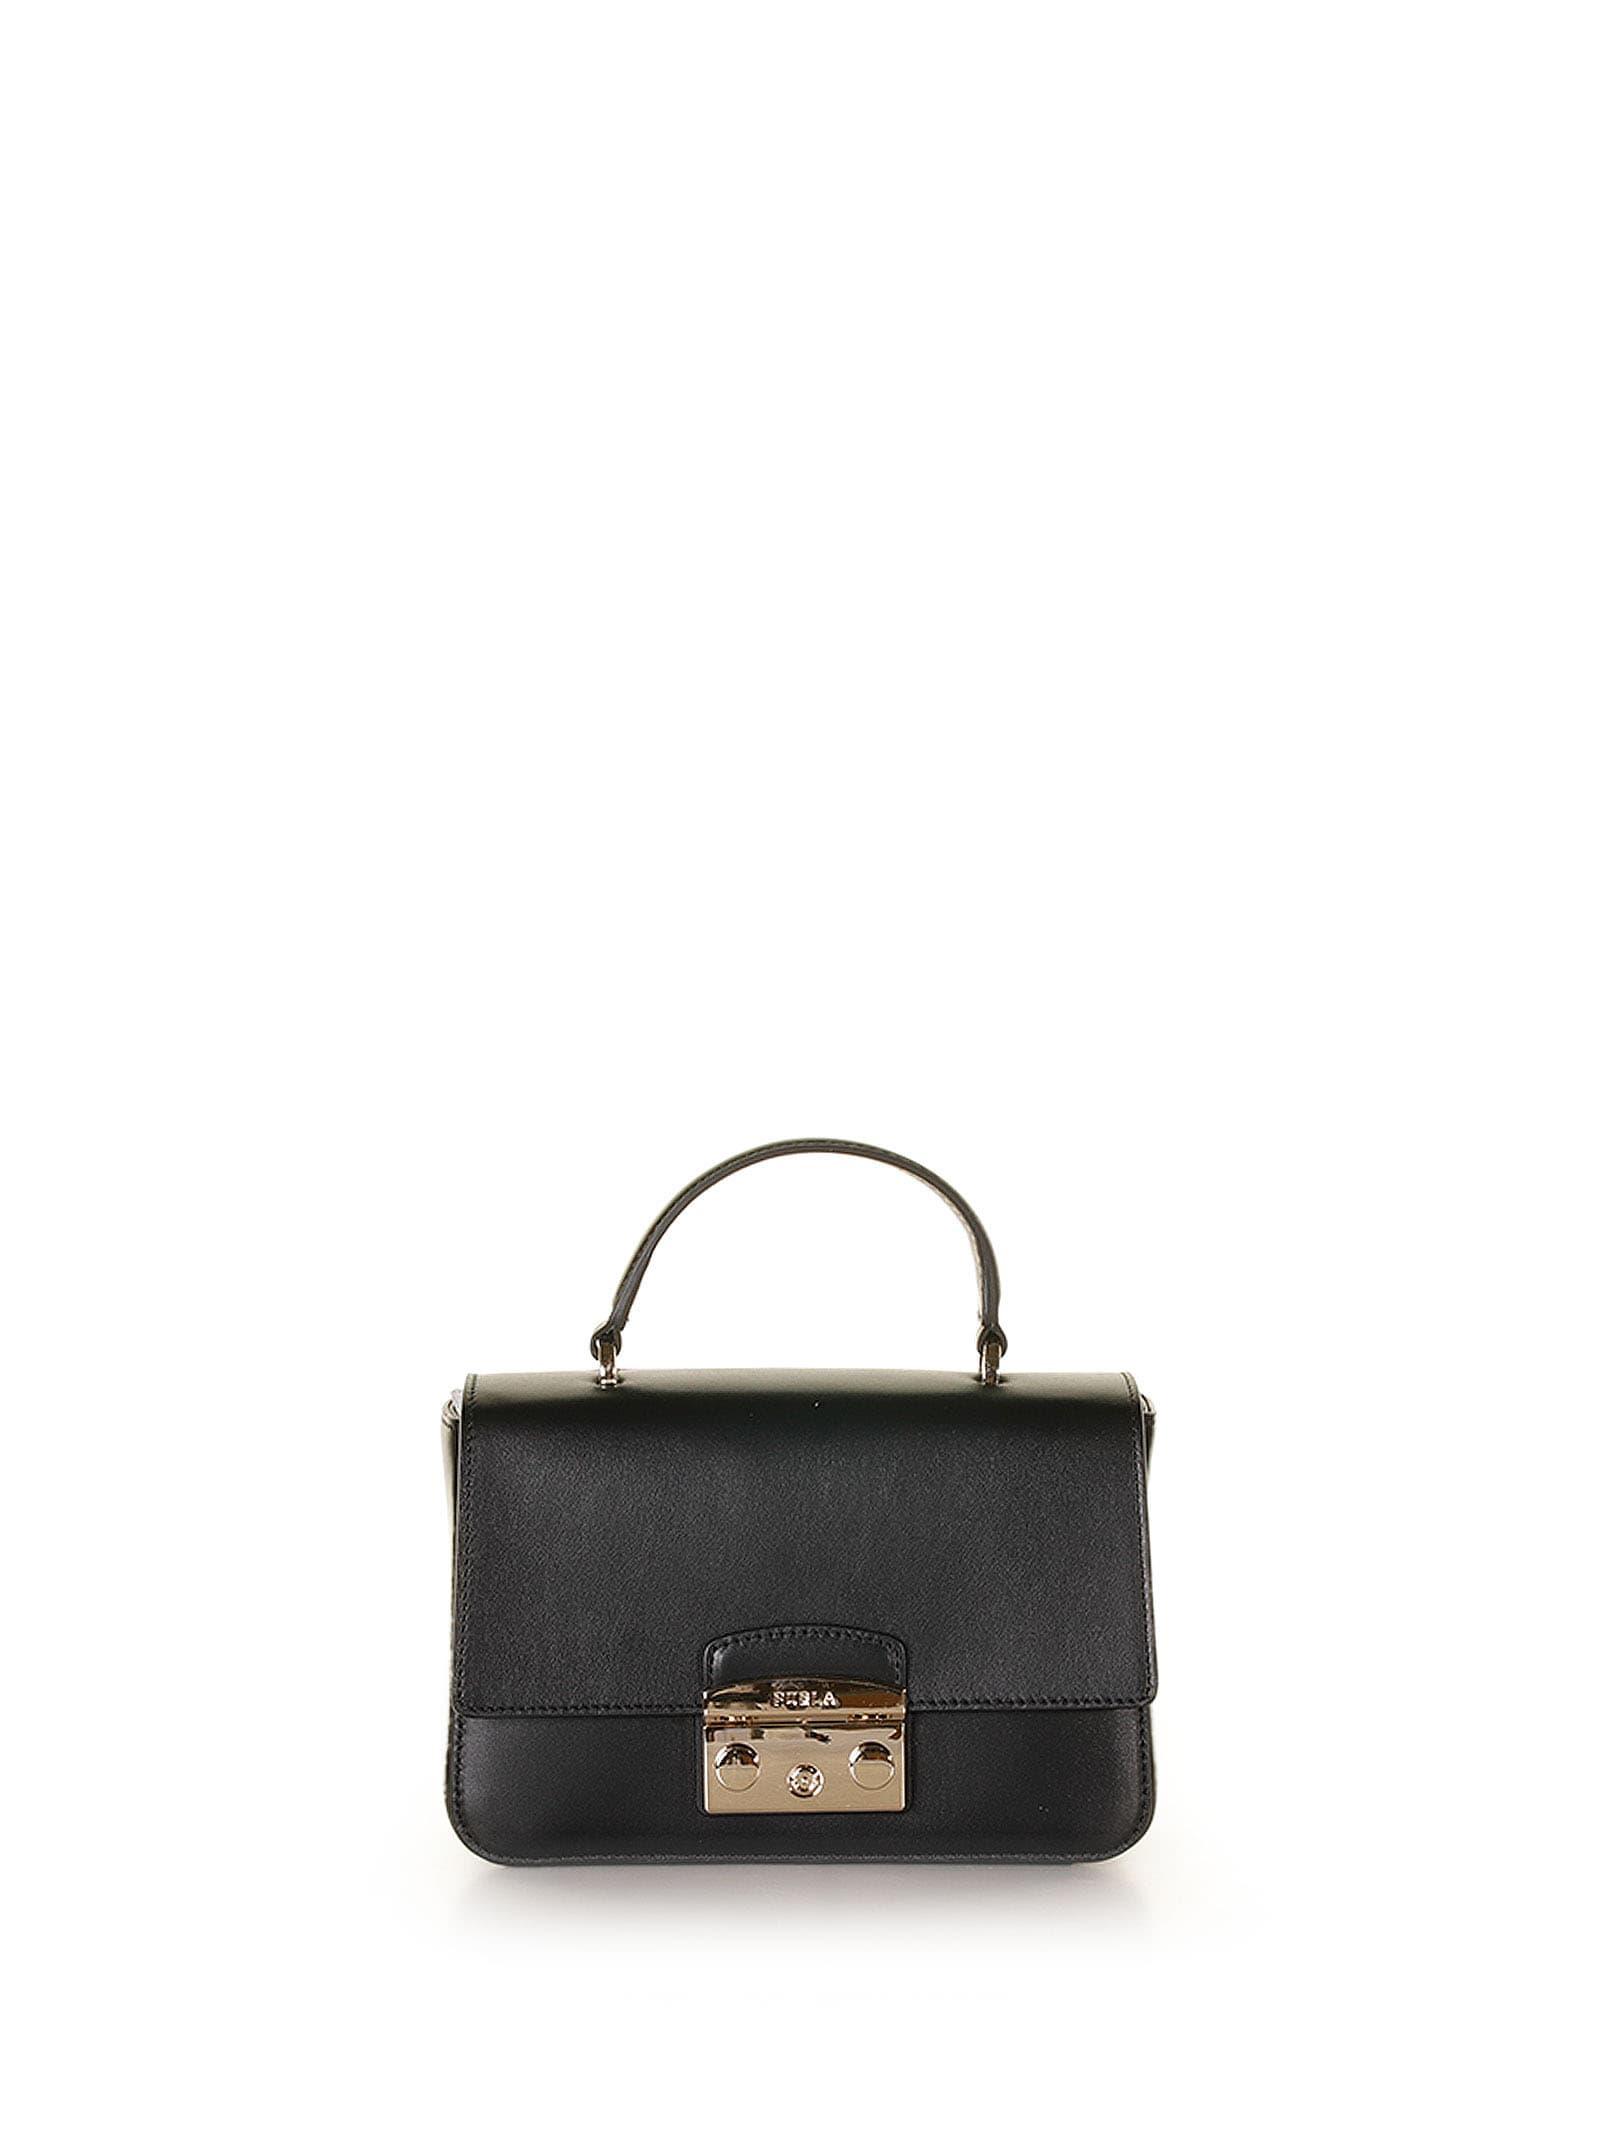 Furla Metropolis Mini Top Handle Bag With Shoulder Strap in Black